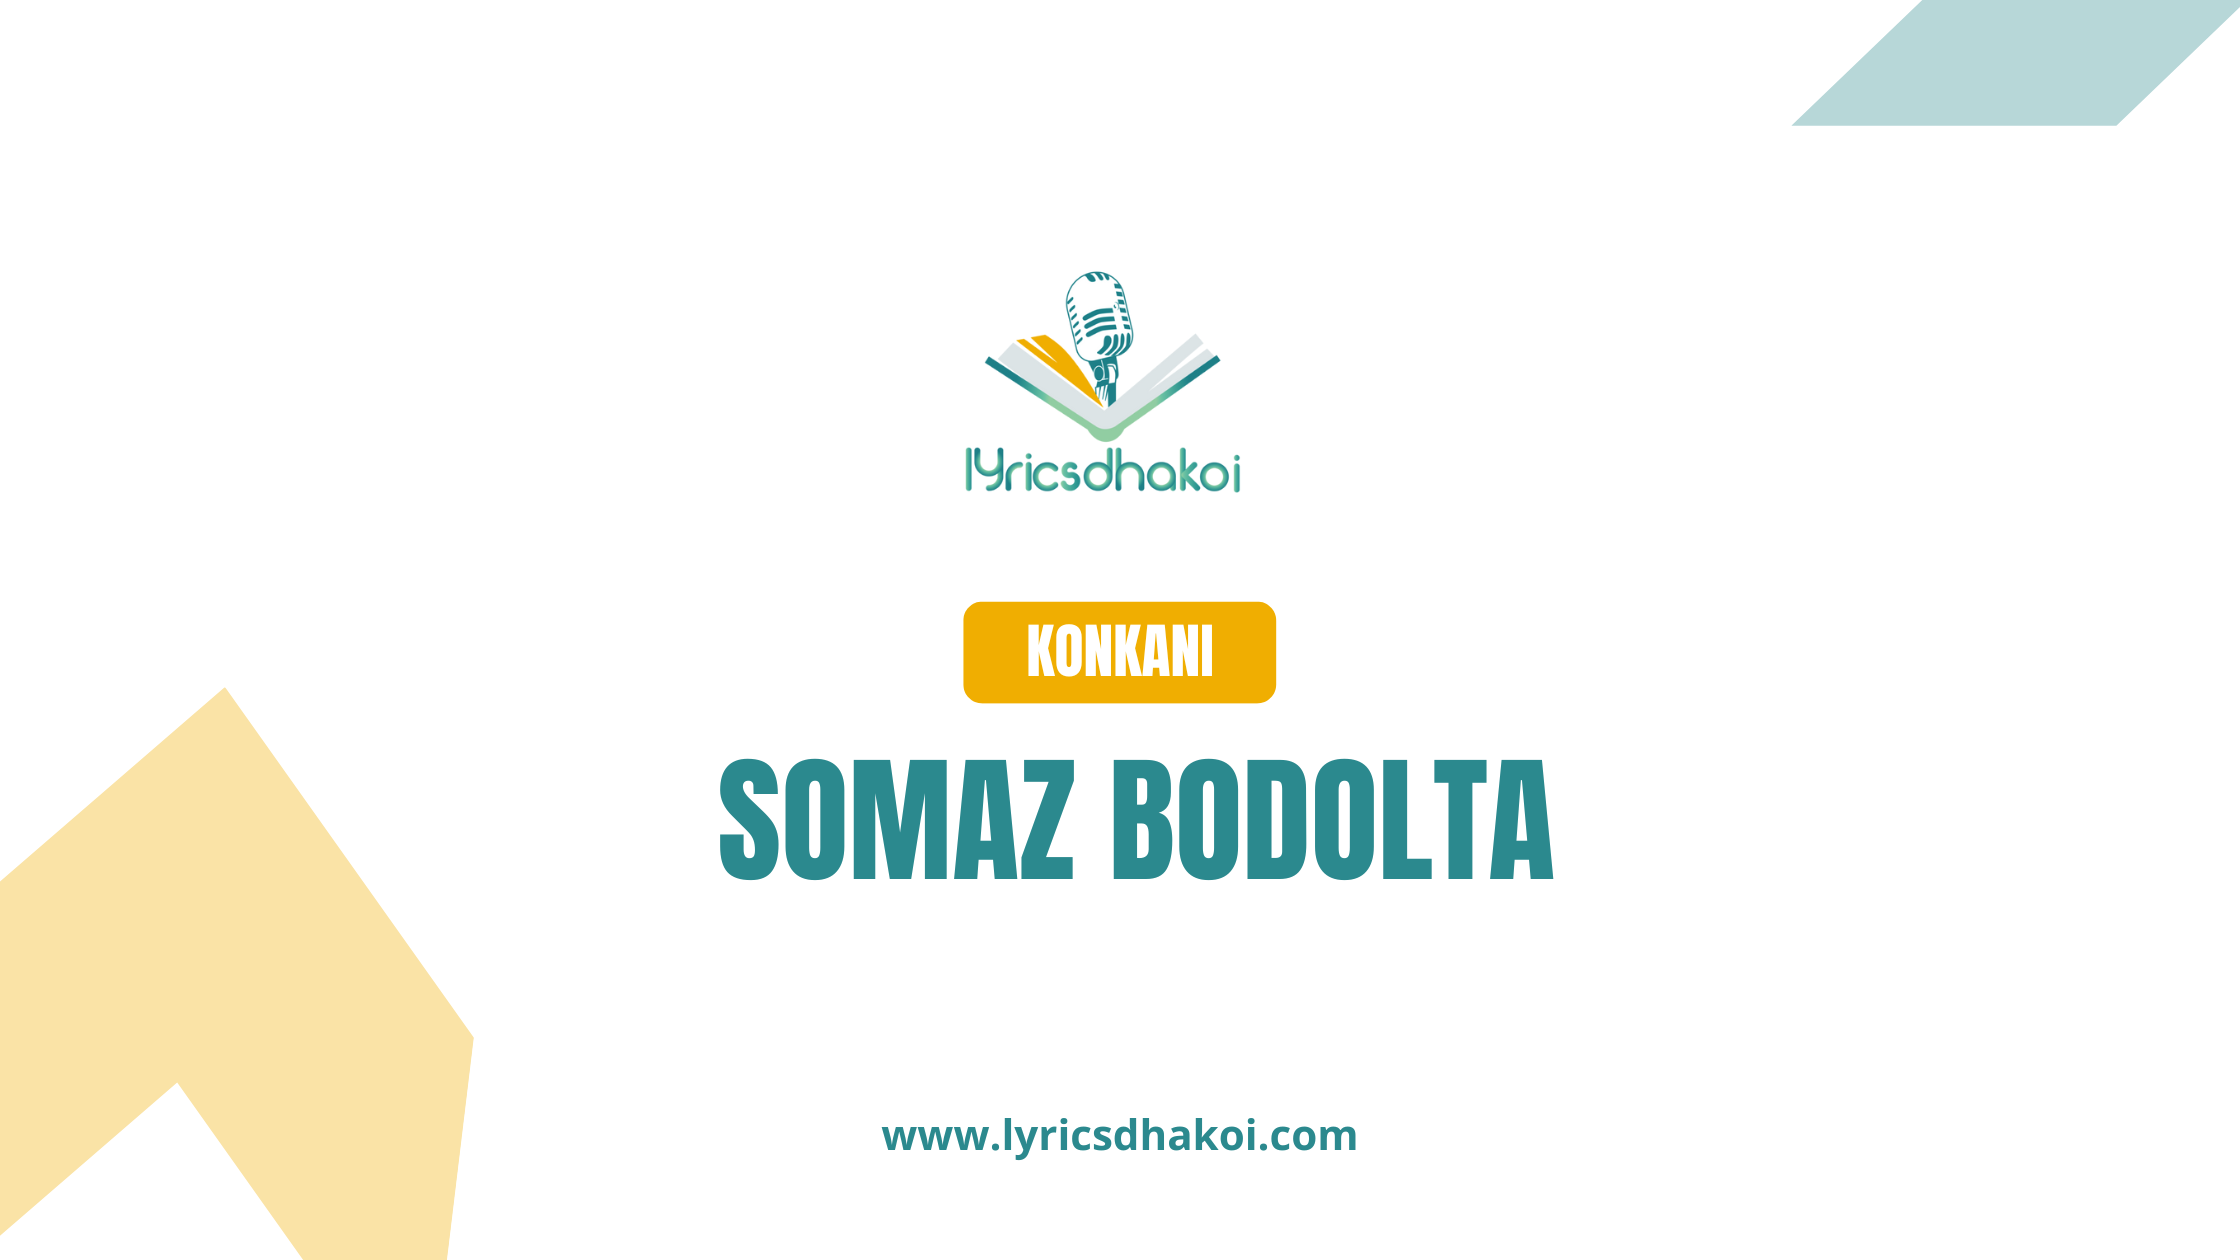 Somaz Bodolta Konkani Lyrics for Karaoke Online - LyricsDhakoi.com